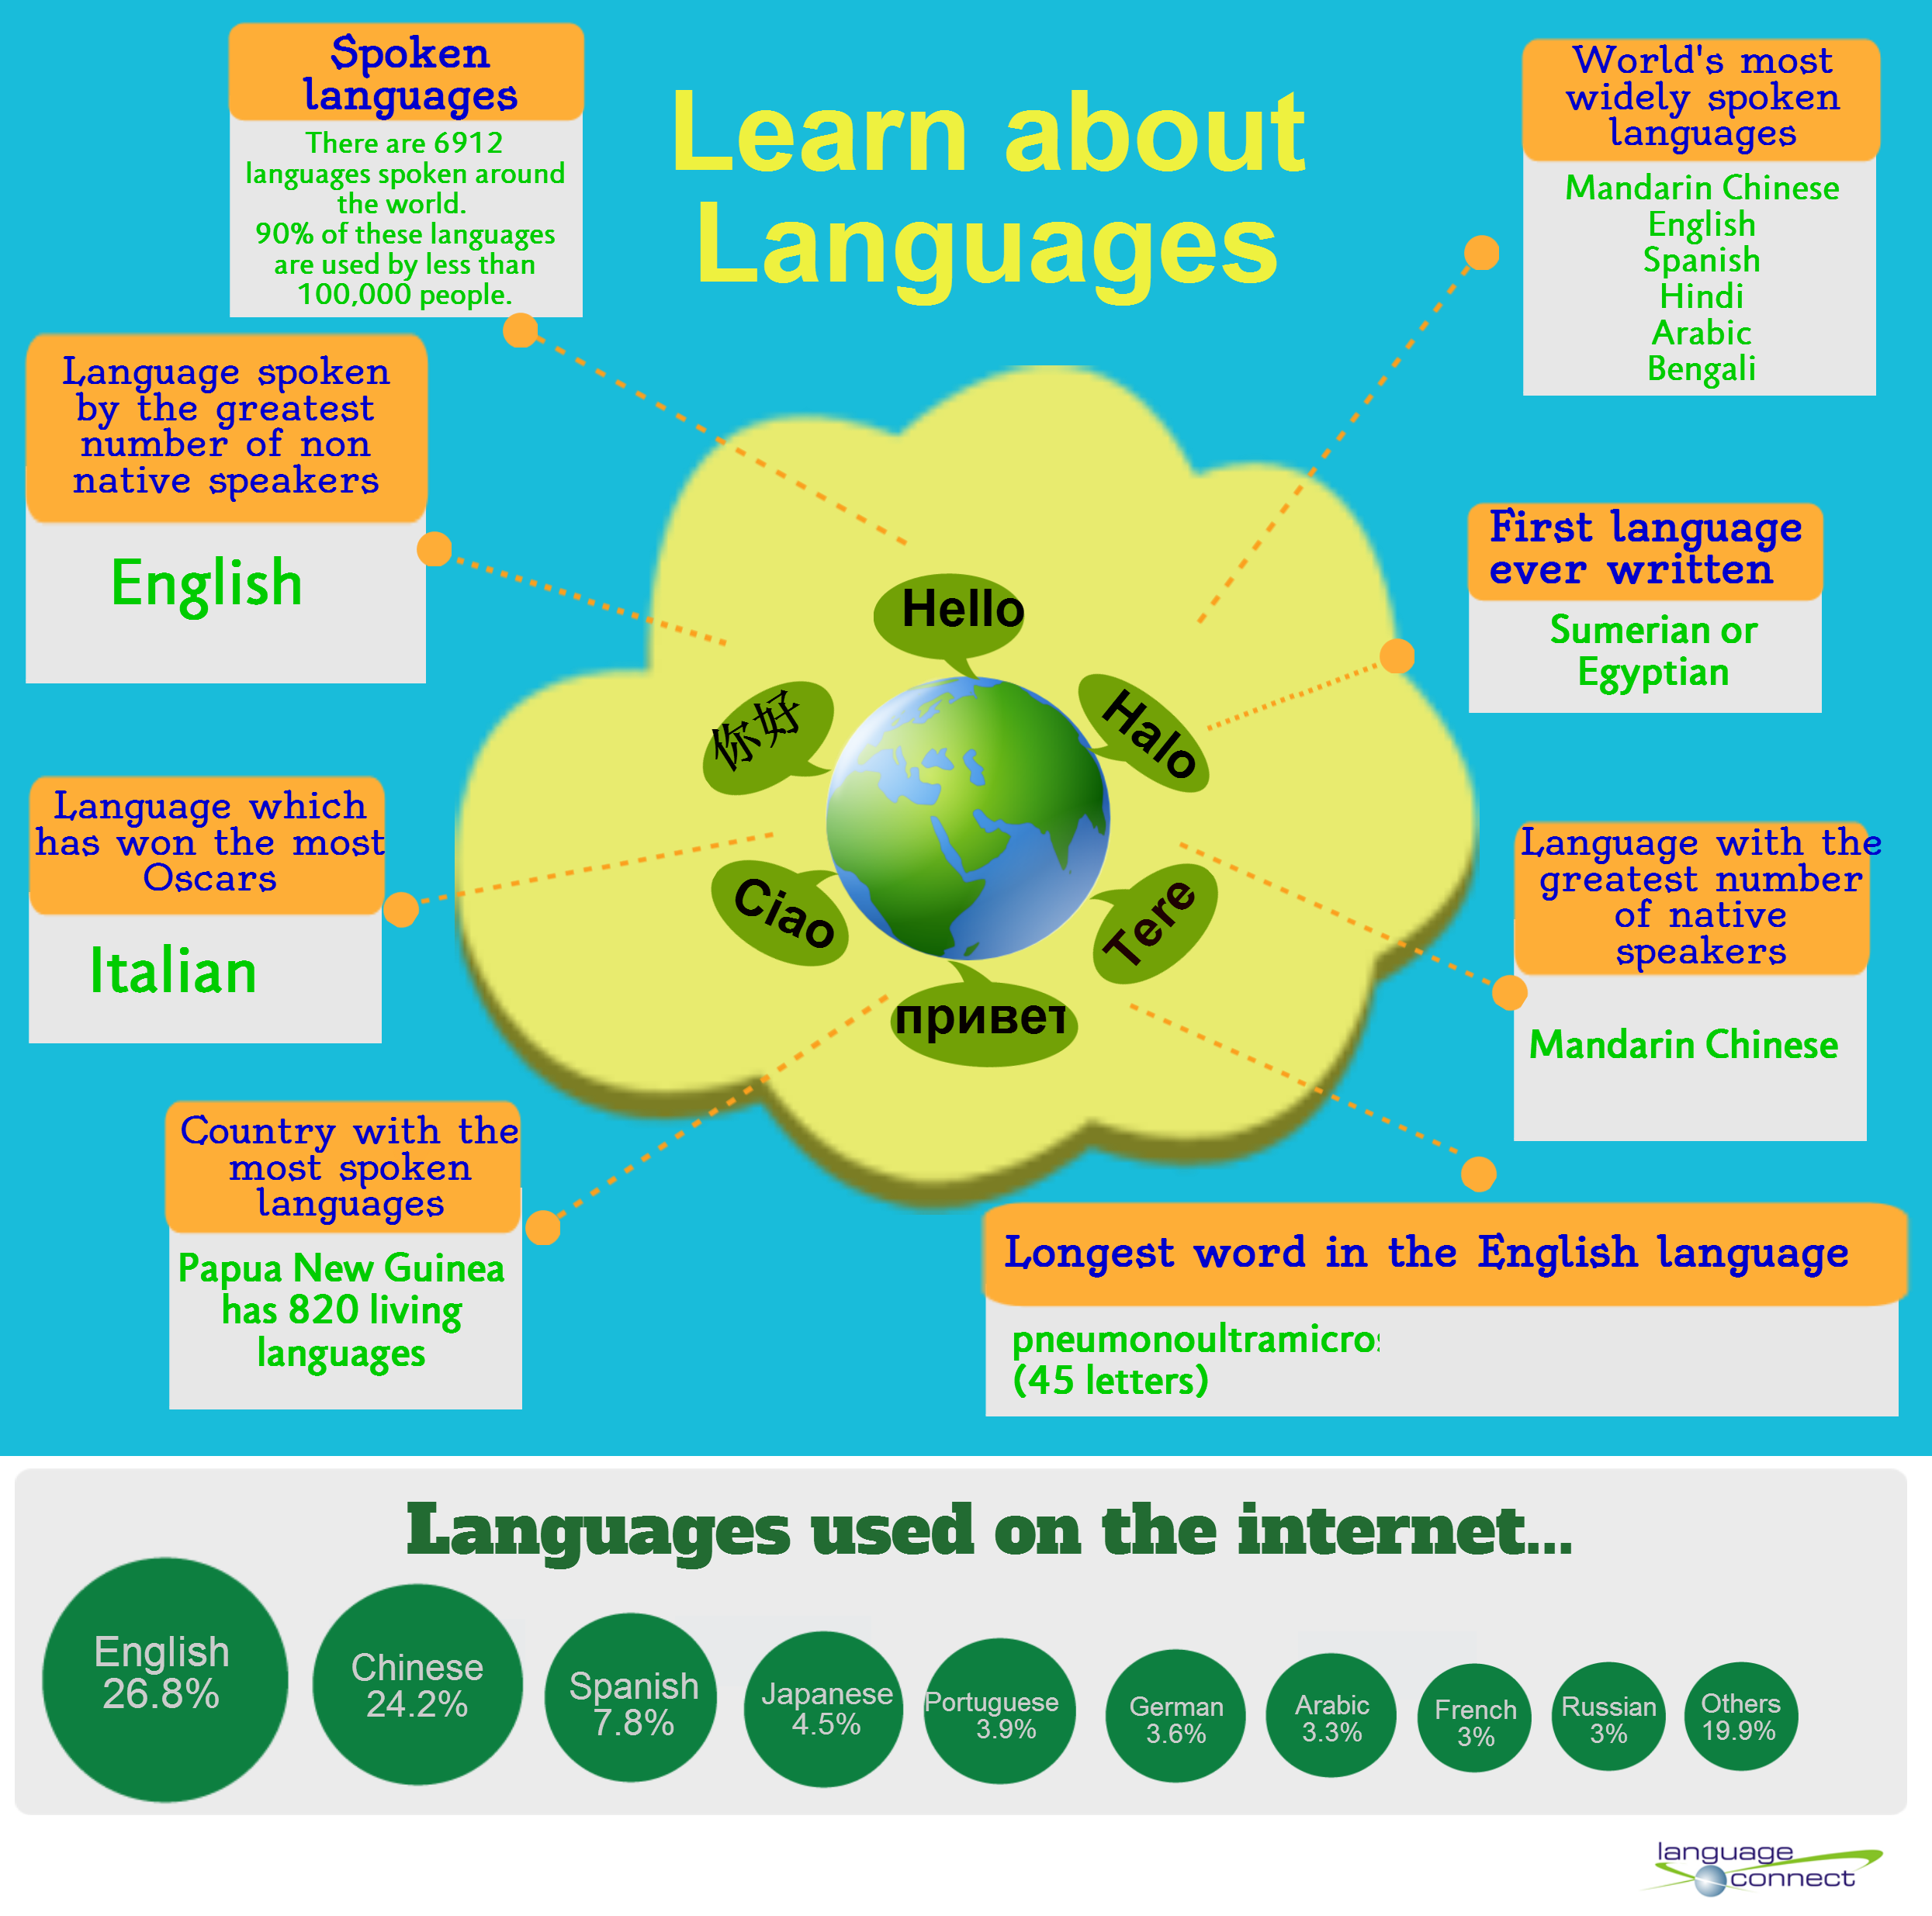 infographic languages